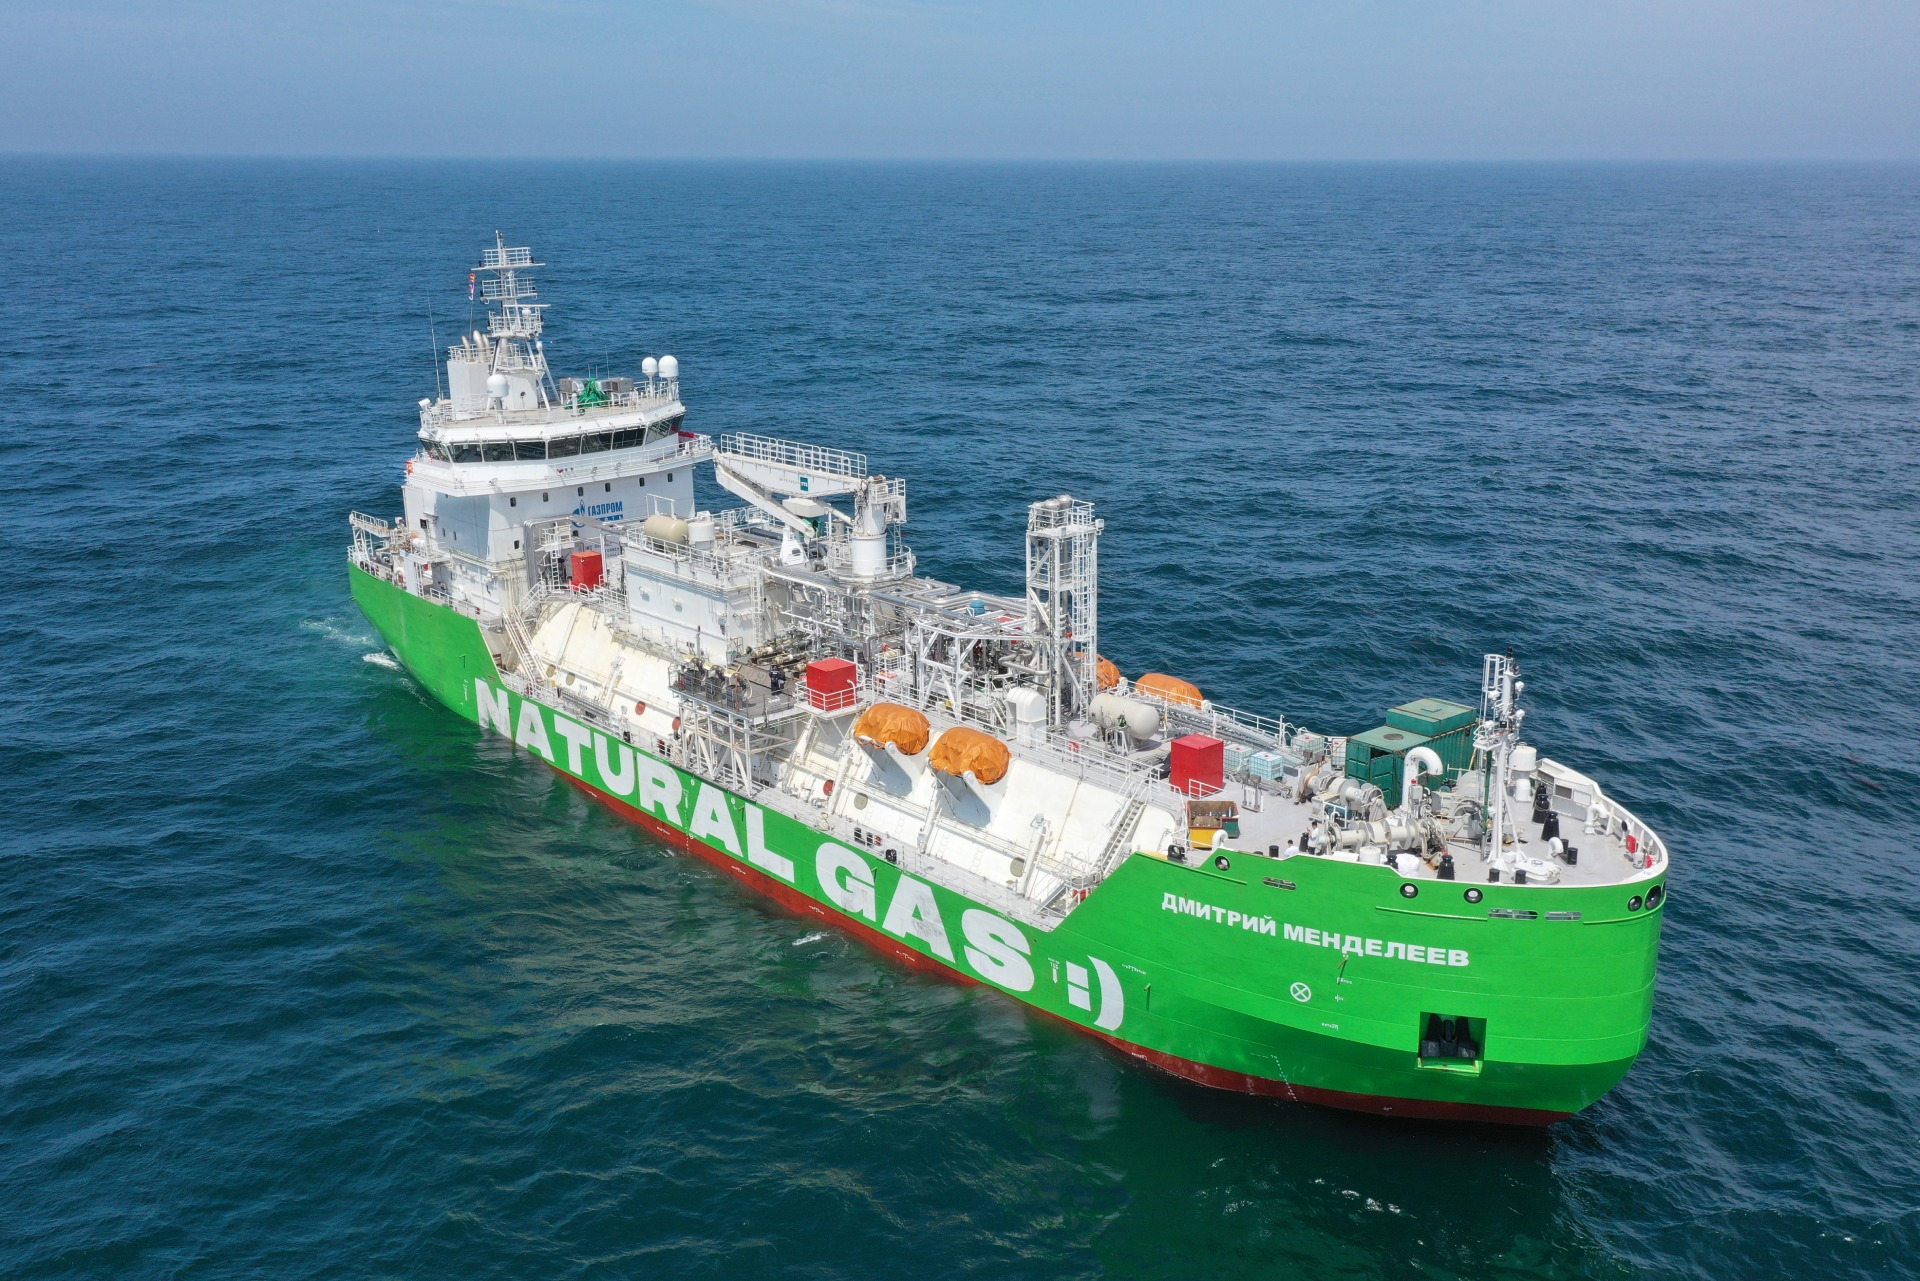 Gazprom Neft's LNG bunkering vessel completes sea trials